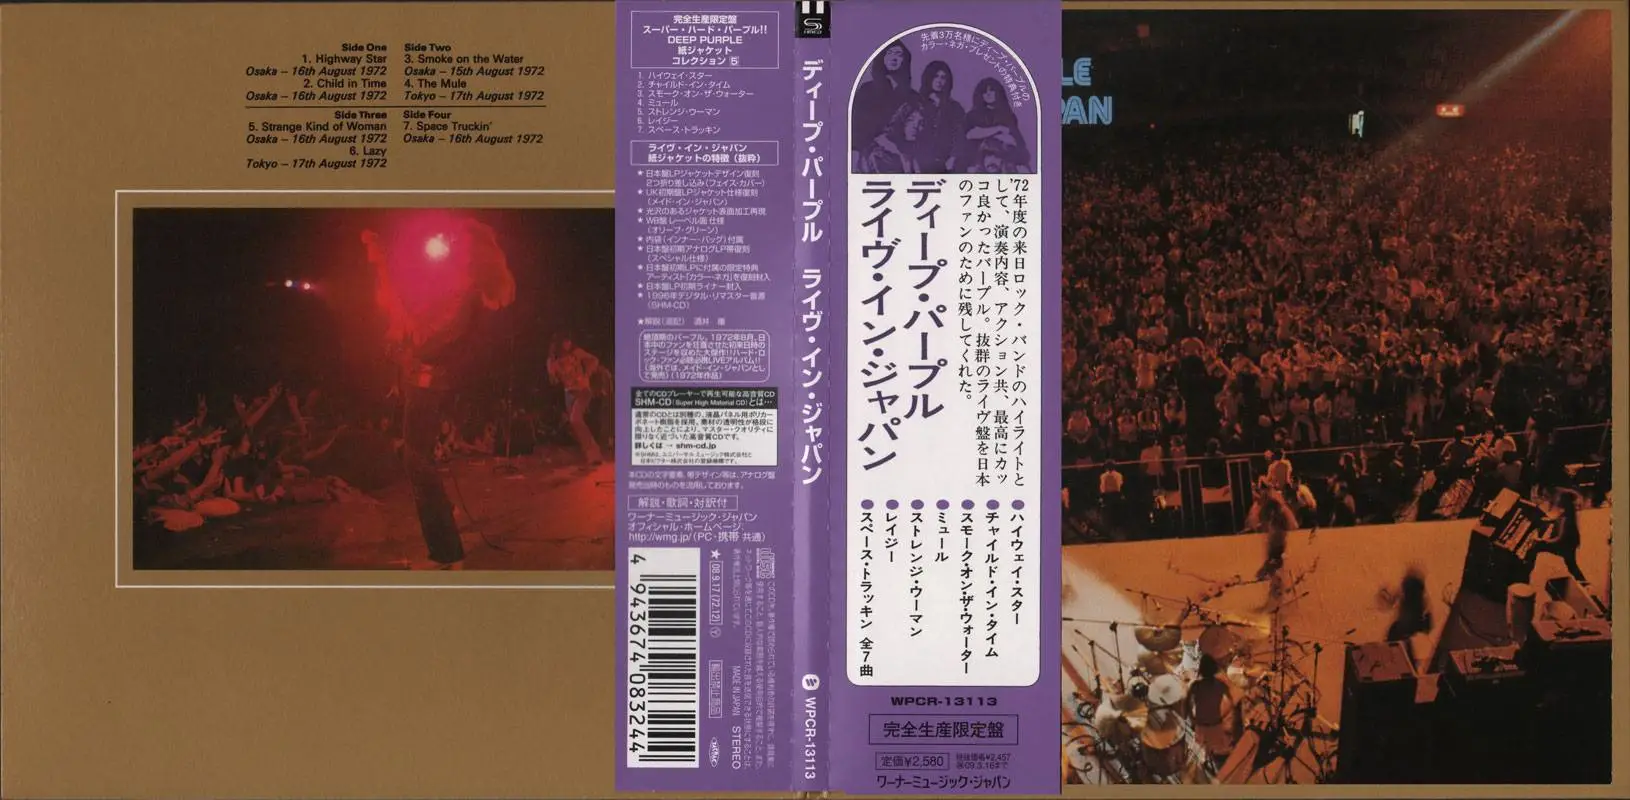 Дип перпл солдаты фортуны. Deep Purple made in Japan 1972 обложка. Deep Purple Live in Tokyo 1972. Deep Purple концерт в Японии 1972. Deep Purple Live in Japan винил.